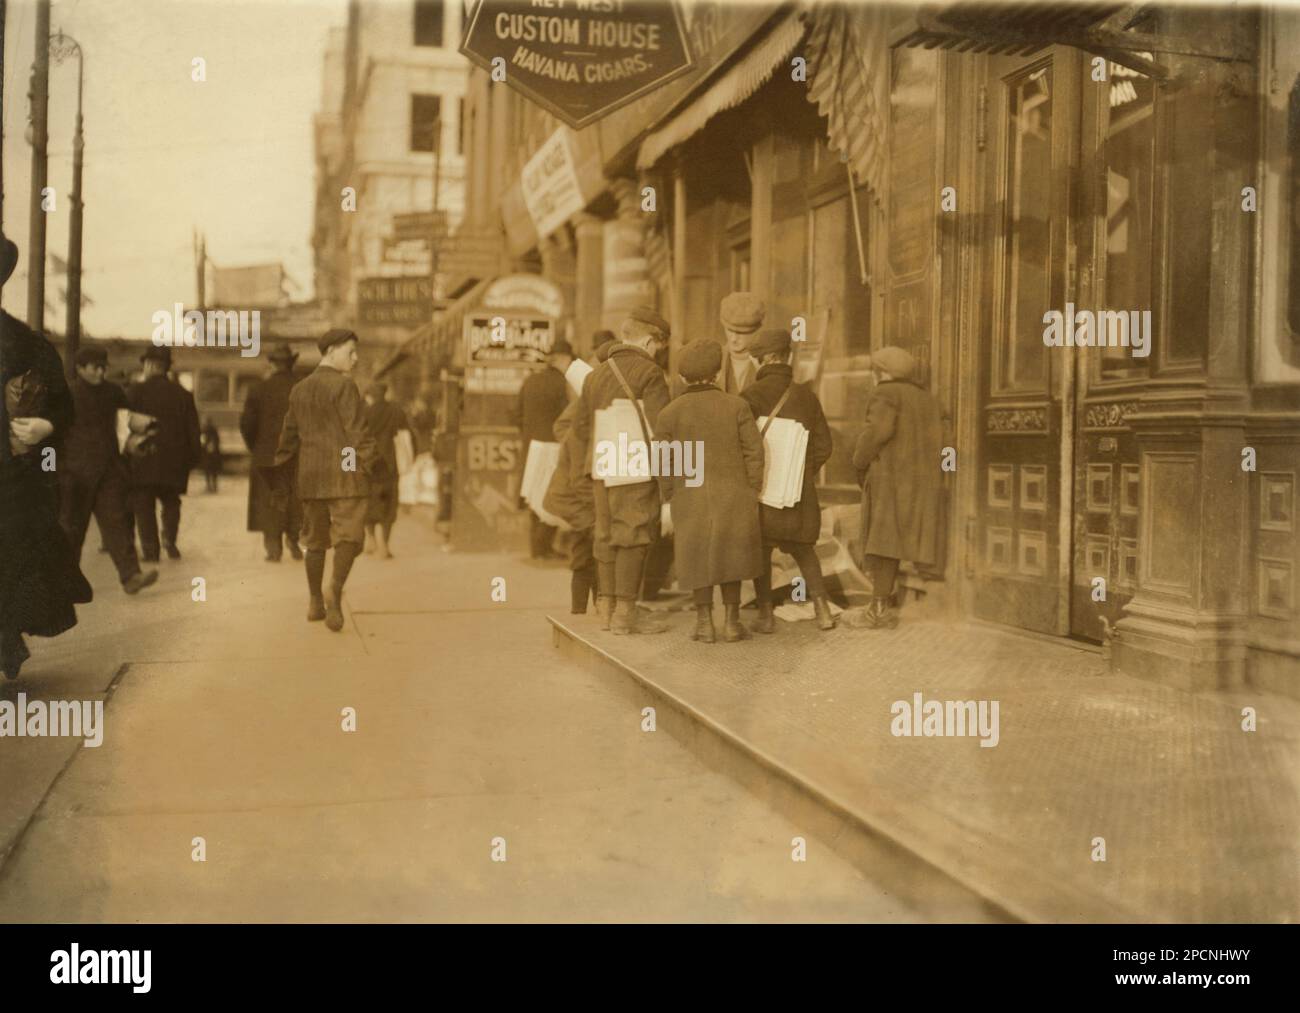 1909 , dezember, Newark, New Jersey, USA : einige von Newarks kleinen Zeitungsjungen. Nachmittag - NEWSBOYS , Fotos von LEWIS HINE ( 1874 - 1940 ) - BAMBINI -- LAVORATORI - BAMBINO - KINDERARBEITER - FABRIK - KINDHEIT - KINDHEIT - KIDNIEN - LAVORO MINORILE - LAVORO - ARBEIT - LAVORATORE - ARBEITNEHMER - OPERAIO - CLASSE OPERAIA LAVORATRICE - ARBEITERKLASSE - OPERAI - LAVORATORI - LAVORO - UNITI D' AMERICA - FOTO STORICHE - GESCHICHTE - PORTRÄT - RITRATTO - TEMPI MODERNI - MODERN TIMES - HAT - CAPPELLO - TURNO DI LAVORO - GIORNALAIO - GIORNALAI - STRILLONI - VENDITORI DI GIORNALI QUOTIDINI AMBULANTI - AMBU Stockfoto